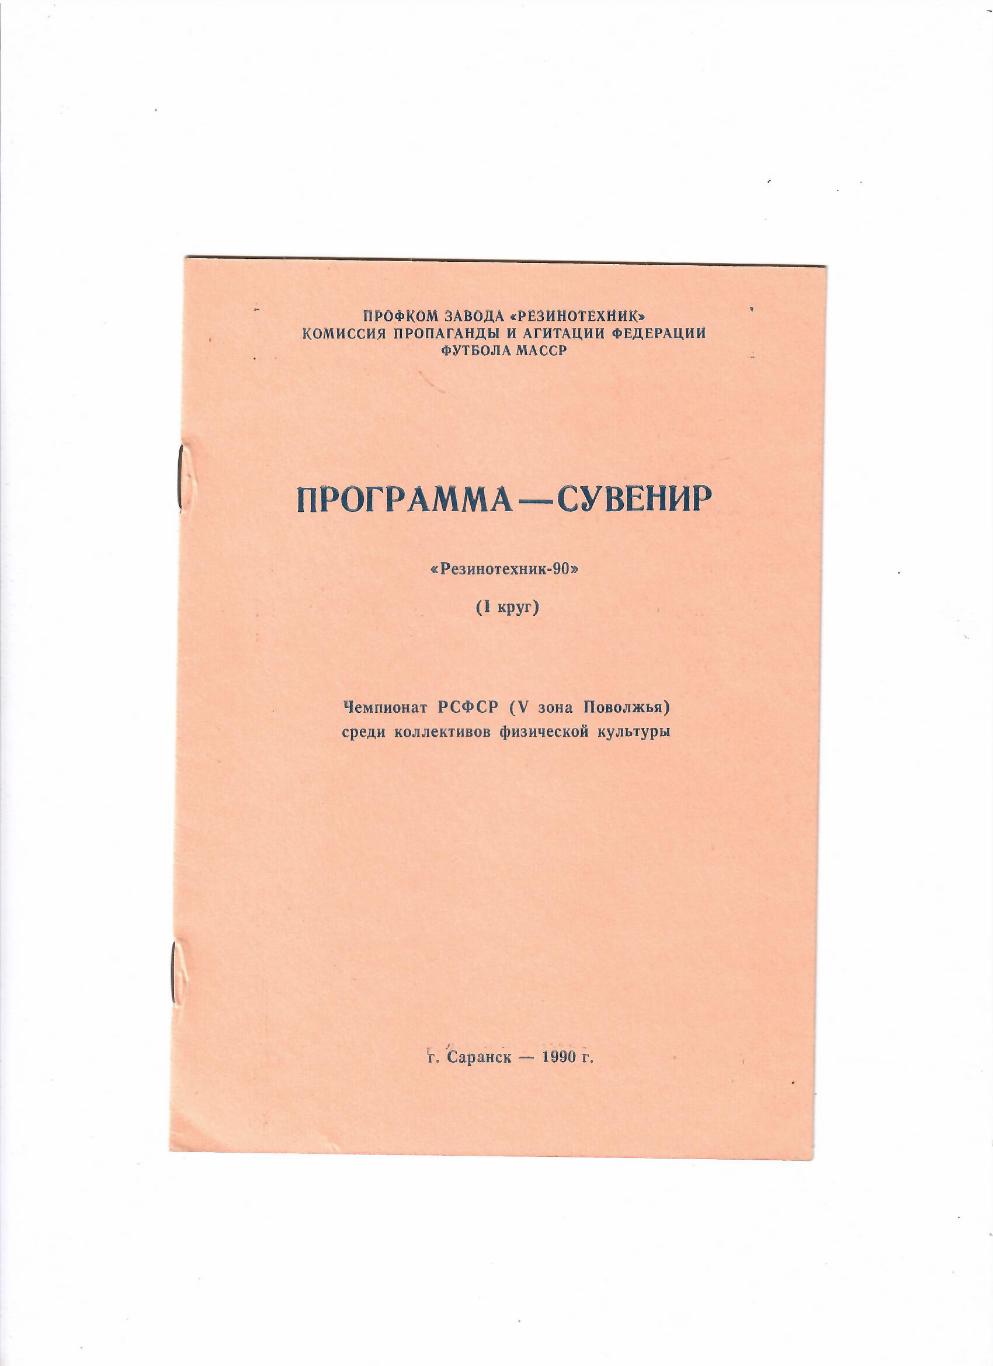 Резинотехник Саранск 1990 1 круг